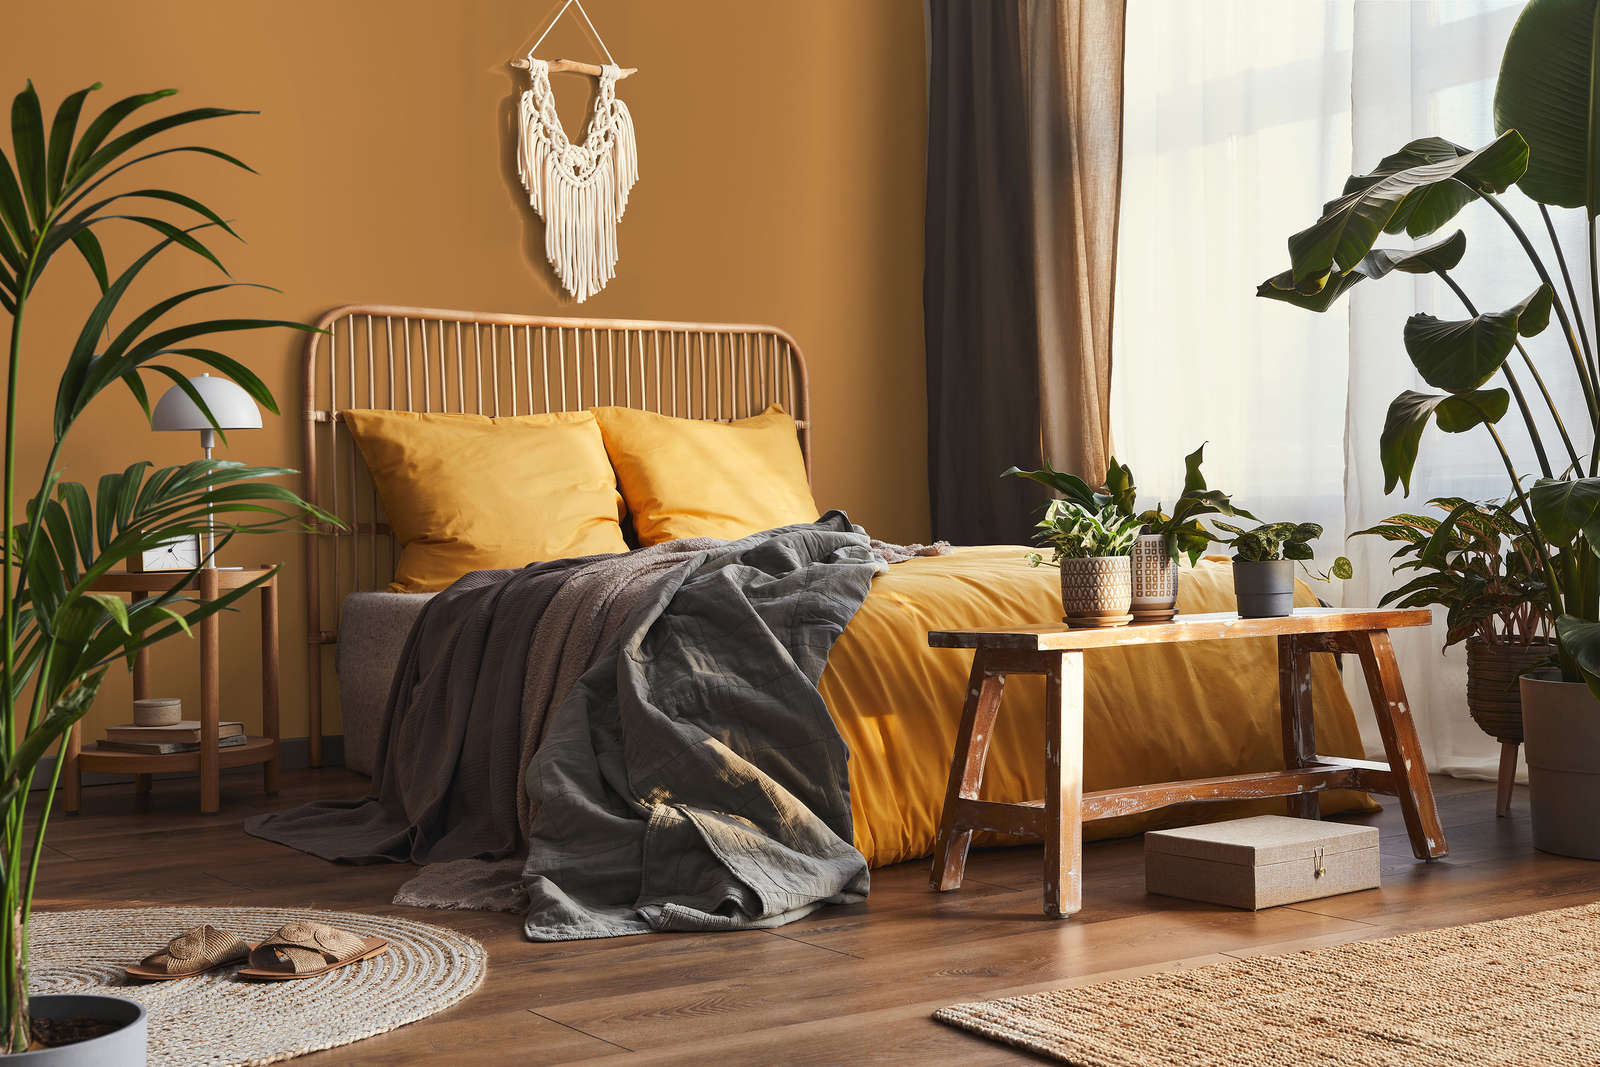             Premium Wall Paint strong light brown »Beige Orange/Sassy Saffron« NW814 – 1 litre
        